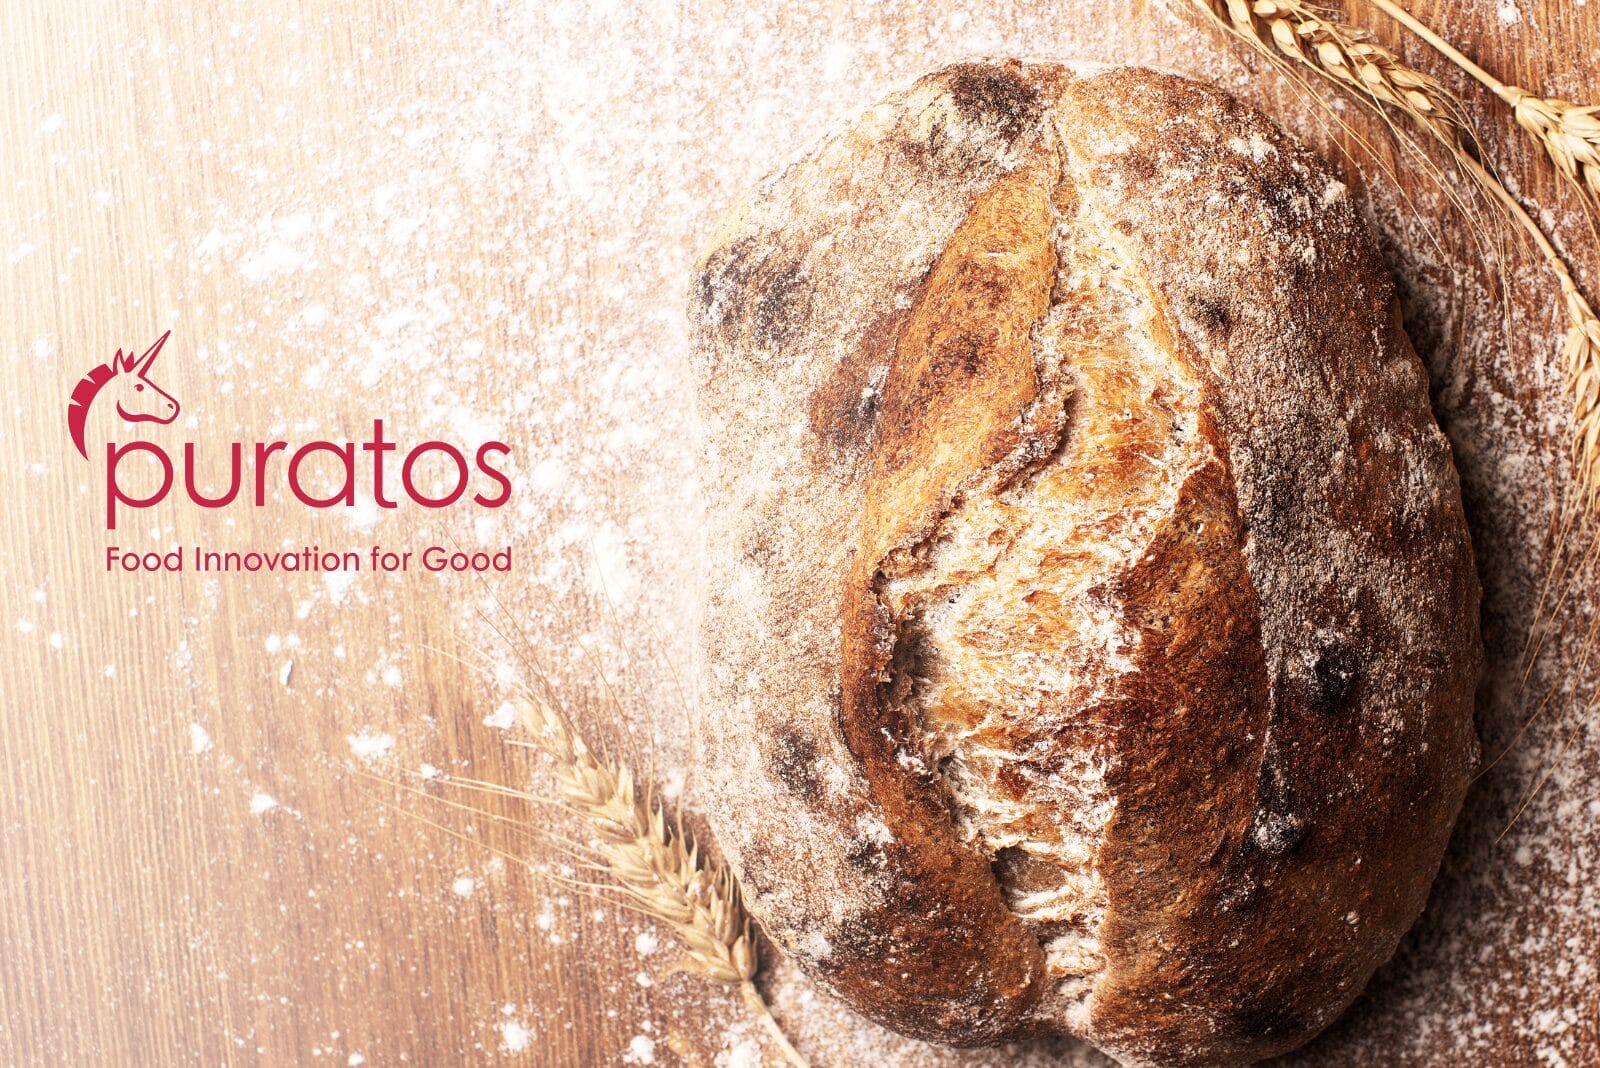 Puratos logo next to sourdough round loaf on wooden counter